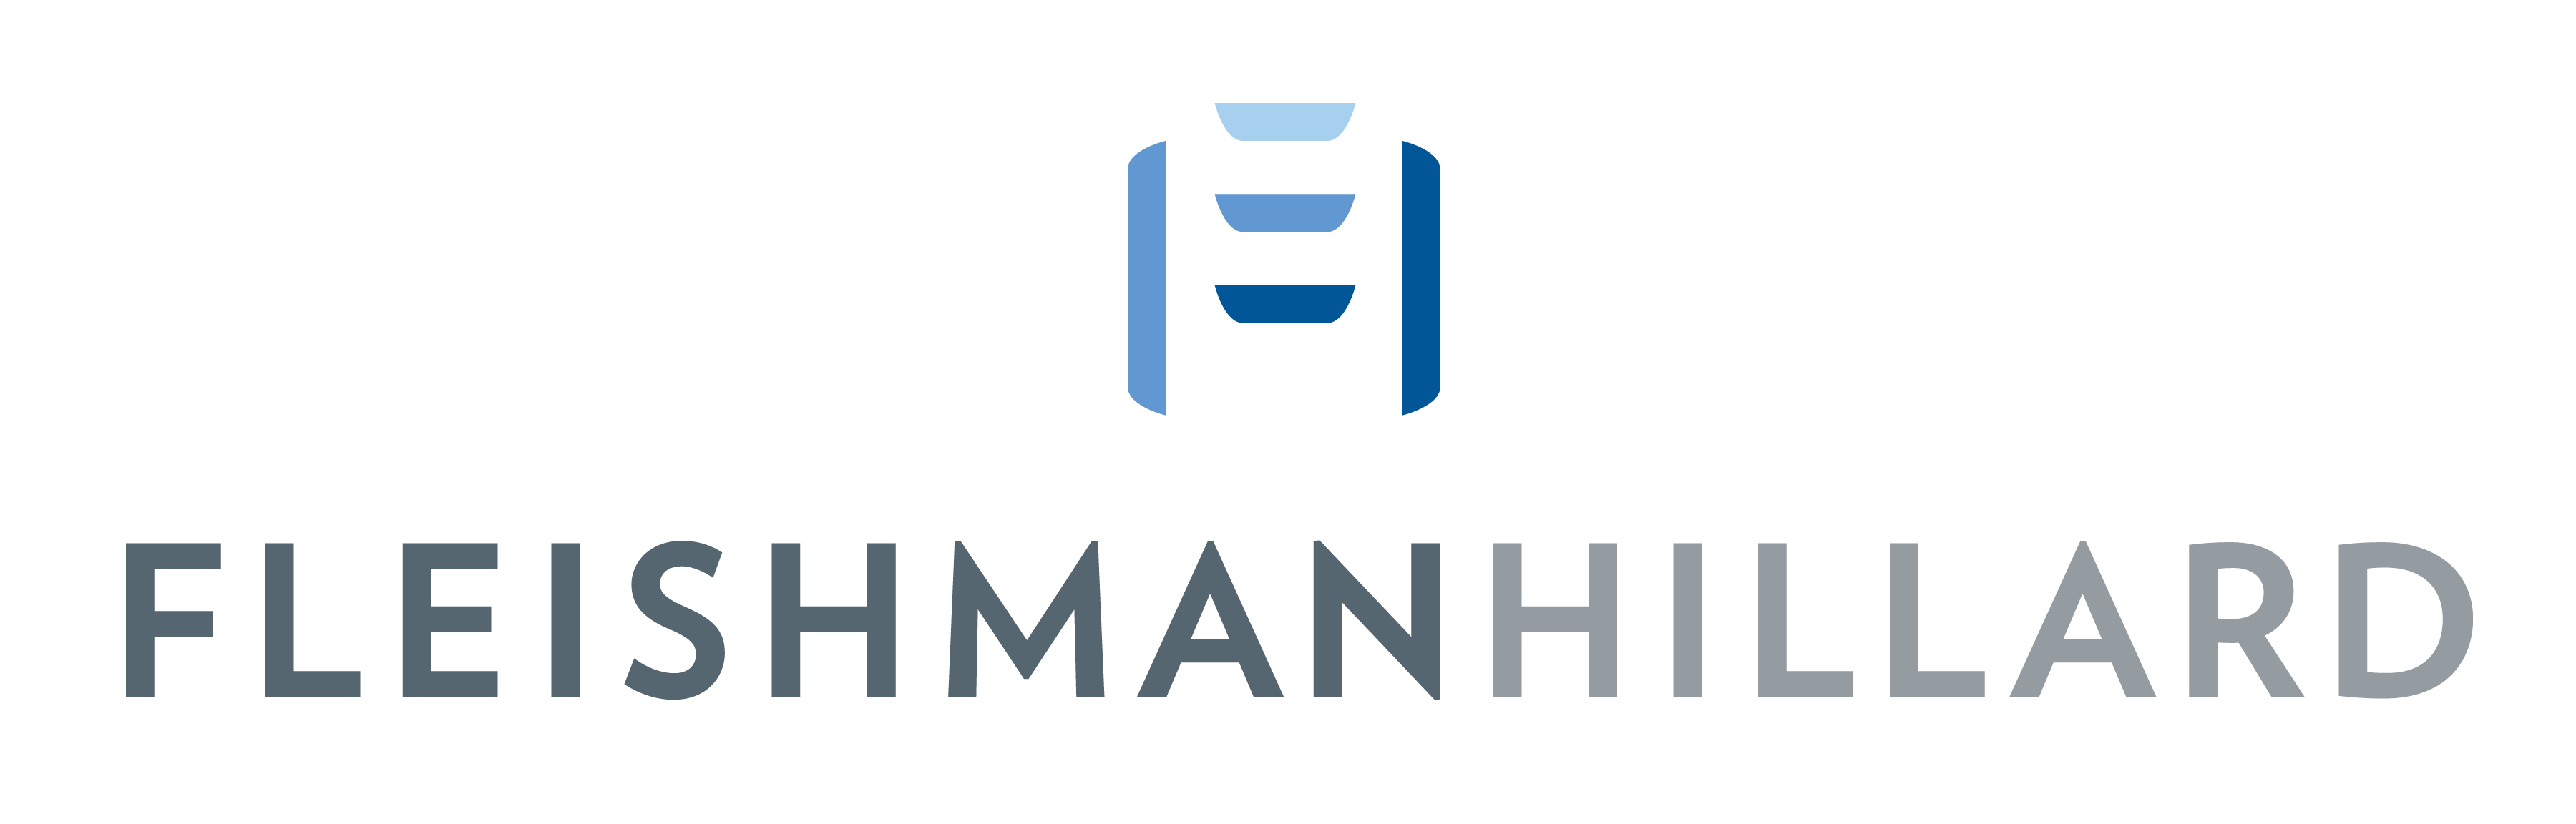  Leading Digital Public Relations Business Logo: Fleishman Hillard